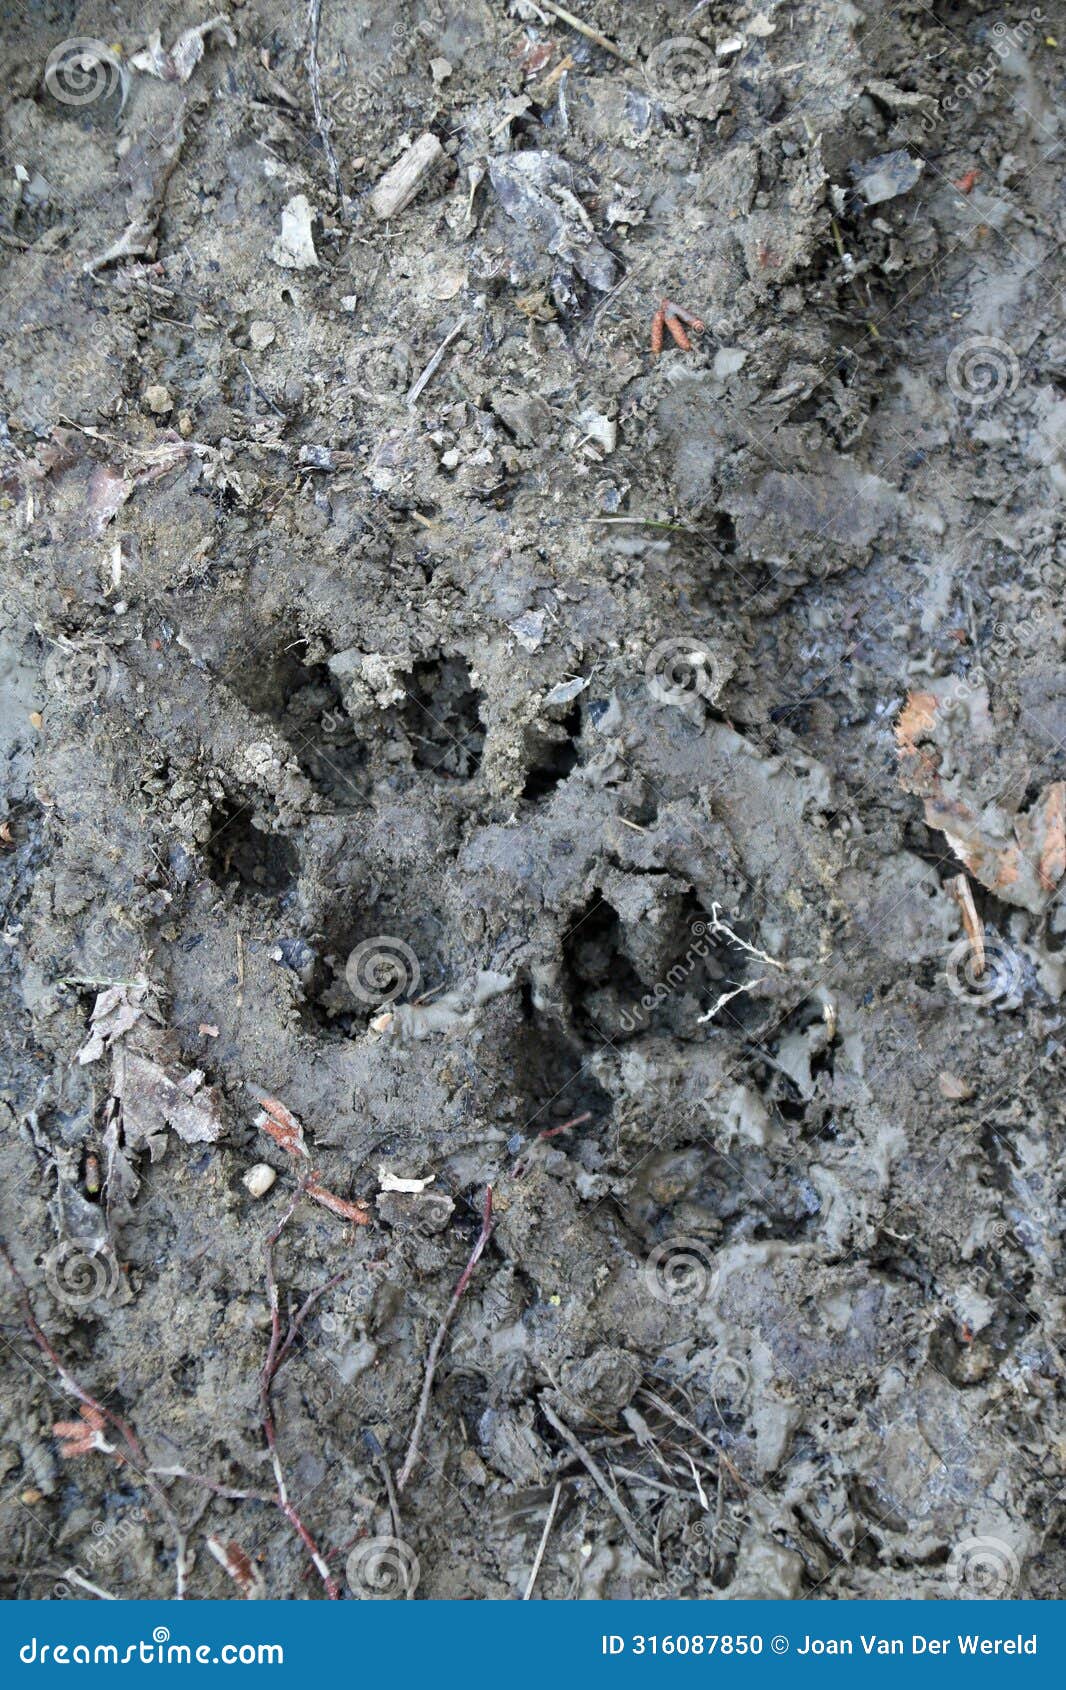 wolf tracks in the mud, emilia romagna apennines, italy